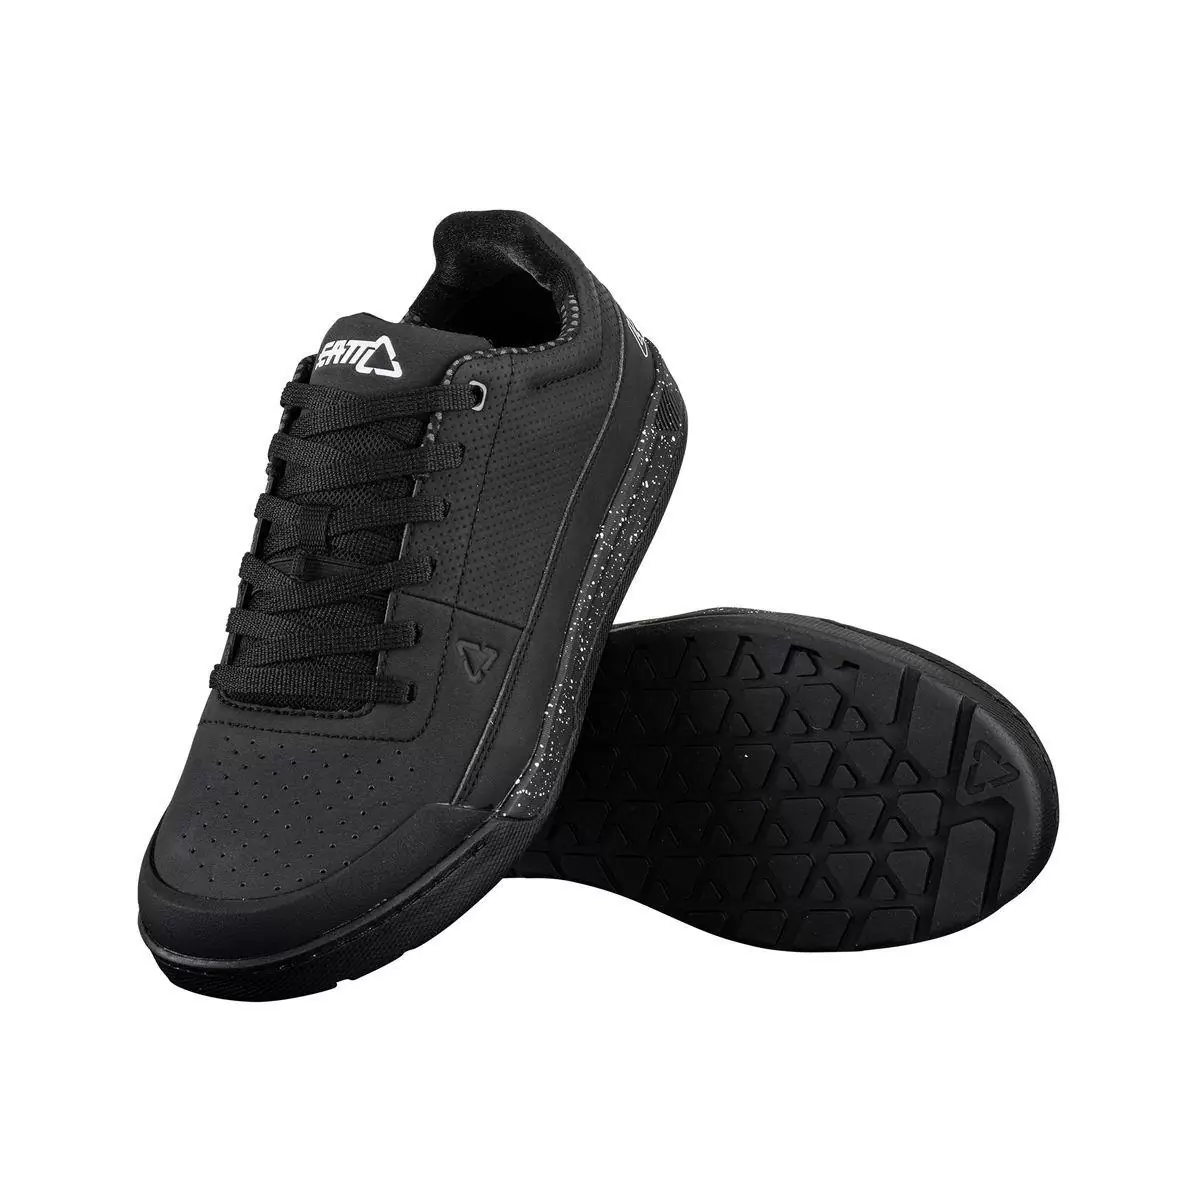 Mtb Shoes 2.0 Flat Black Size 48.5 #5